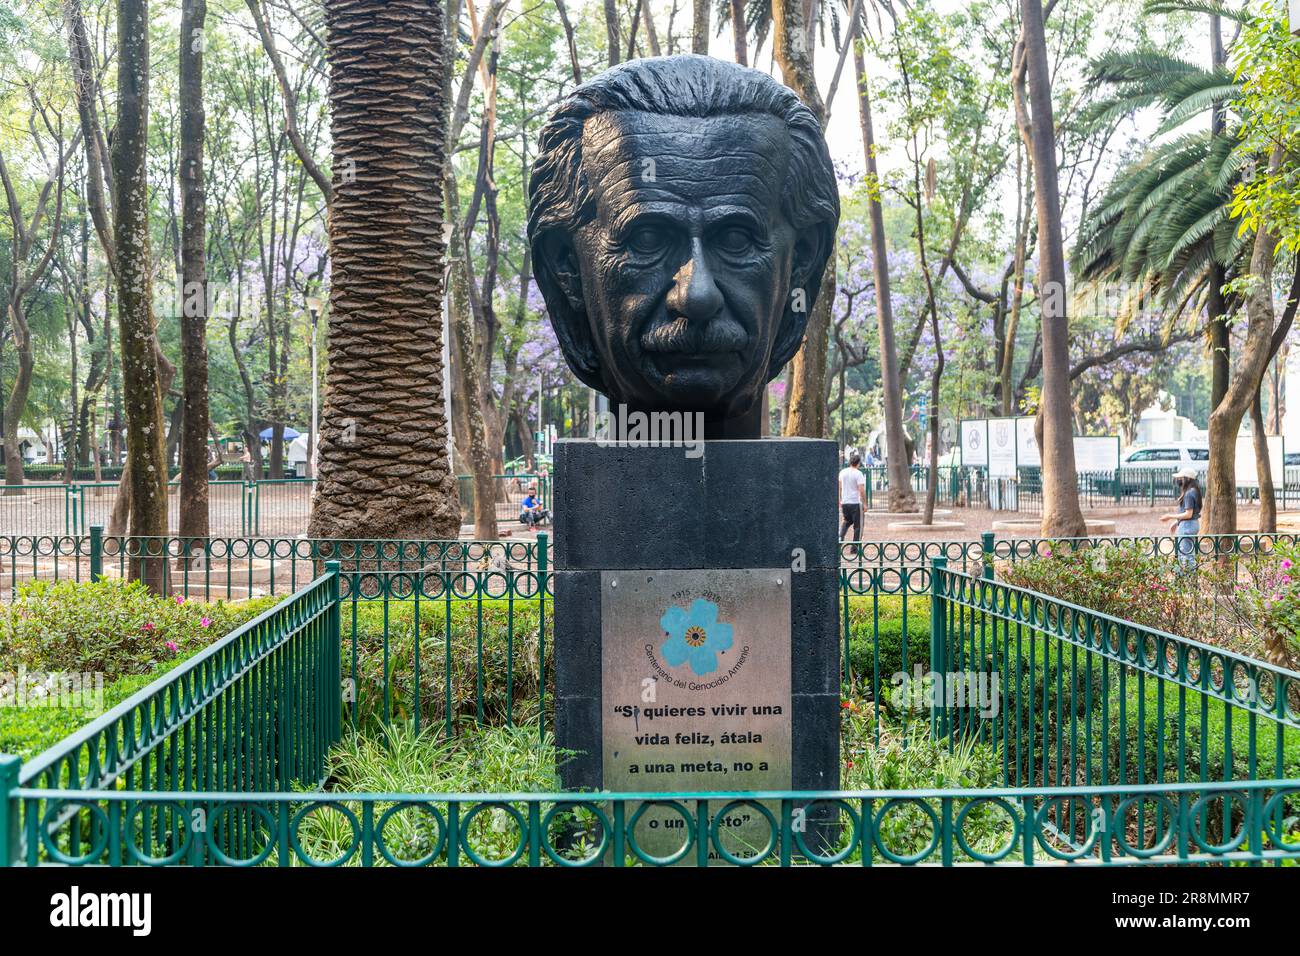 Albert Einstein bust, memorial monument to Armenia genocide, Parque Mexico, La Condesa, Mexico City, Mexico Stock Photo